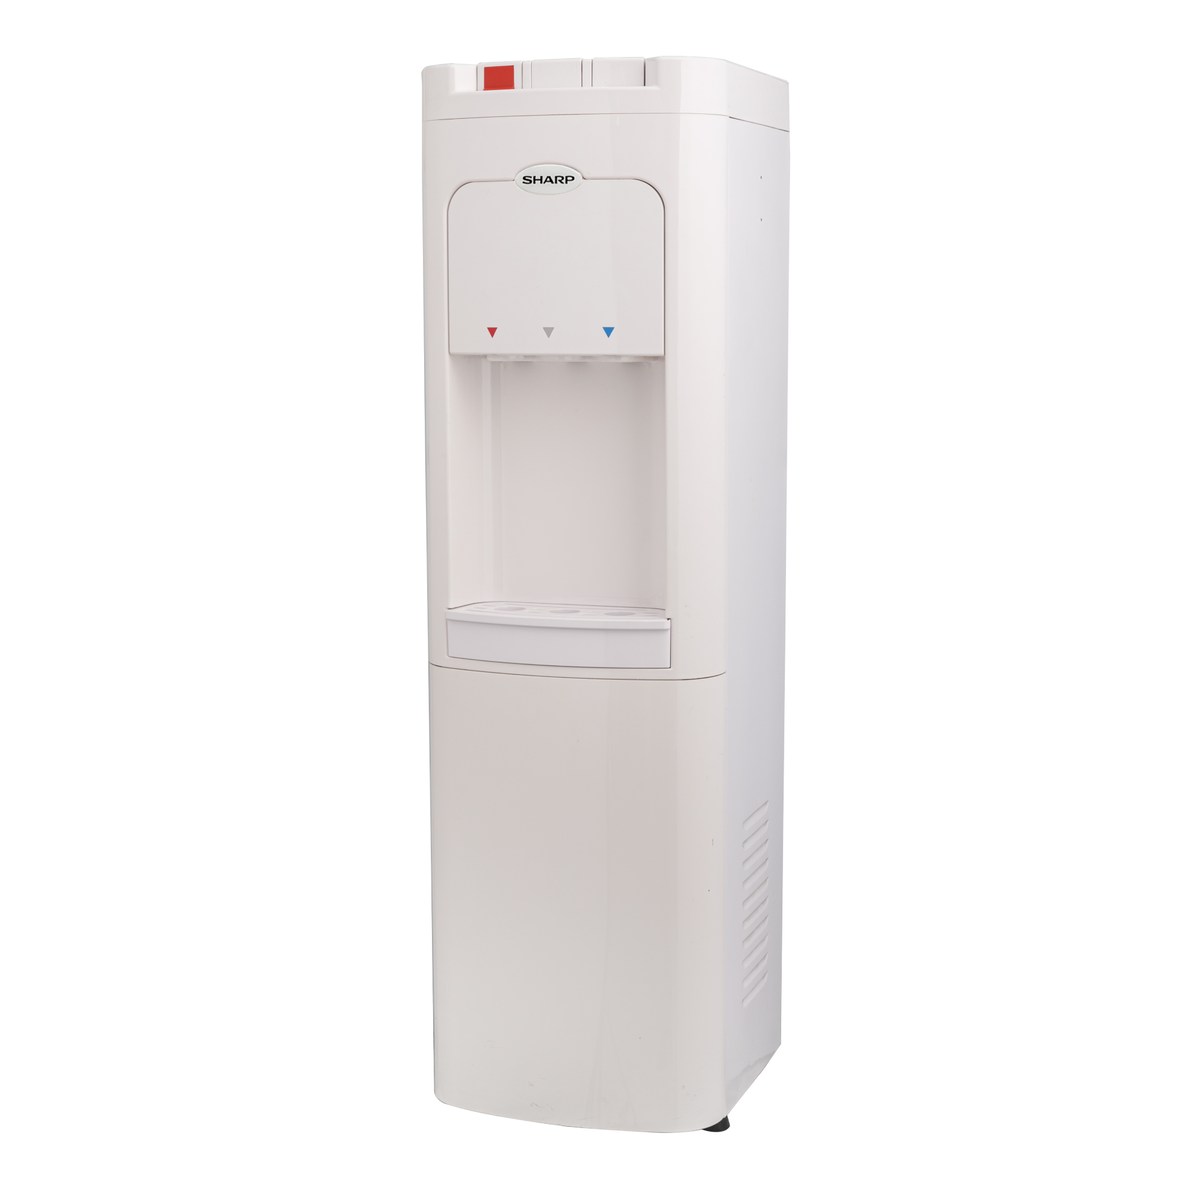 Sharp Top Loading Three Faucet Water Dispenser, 5 Gallon Capacity, White, SWD-E3TL-WH3